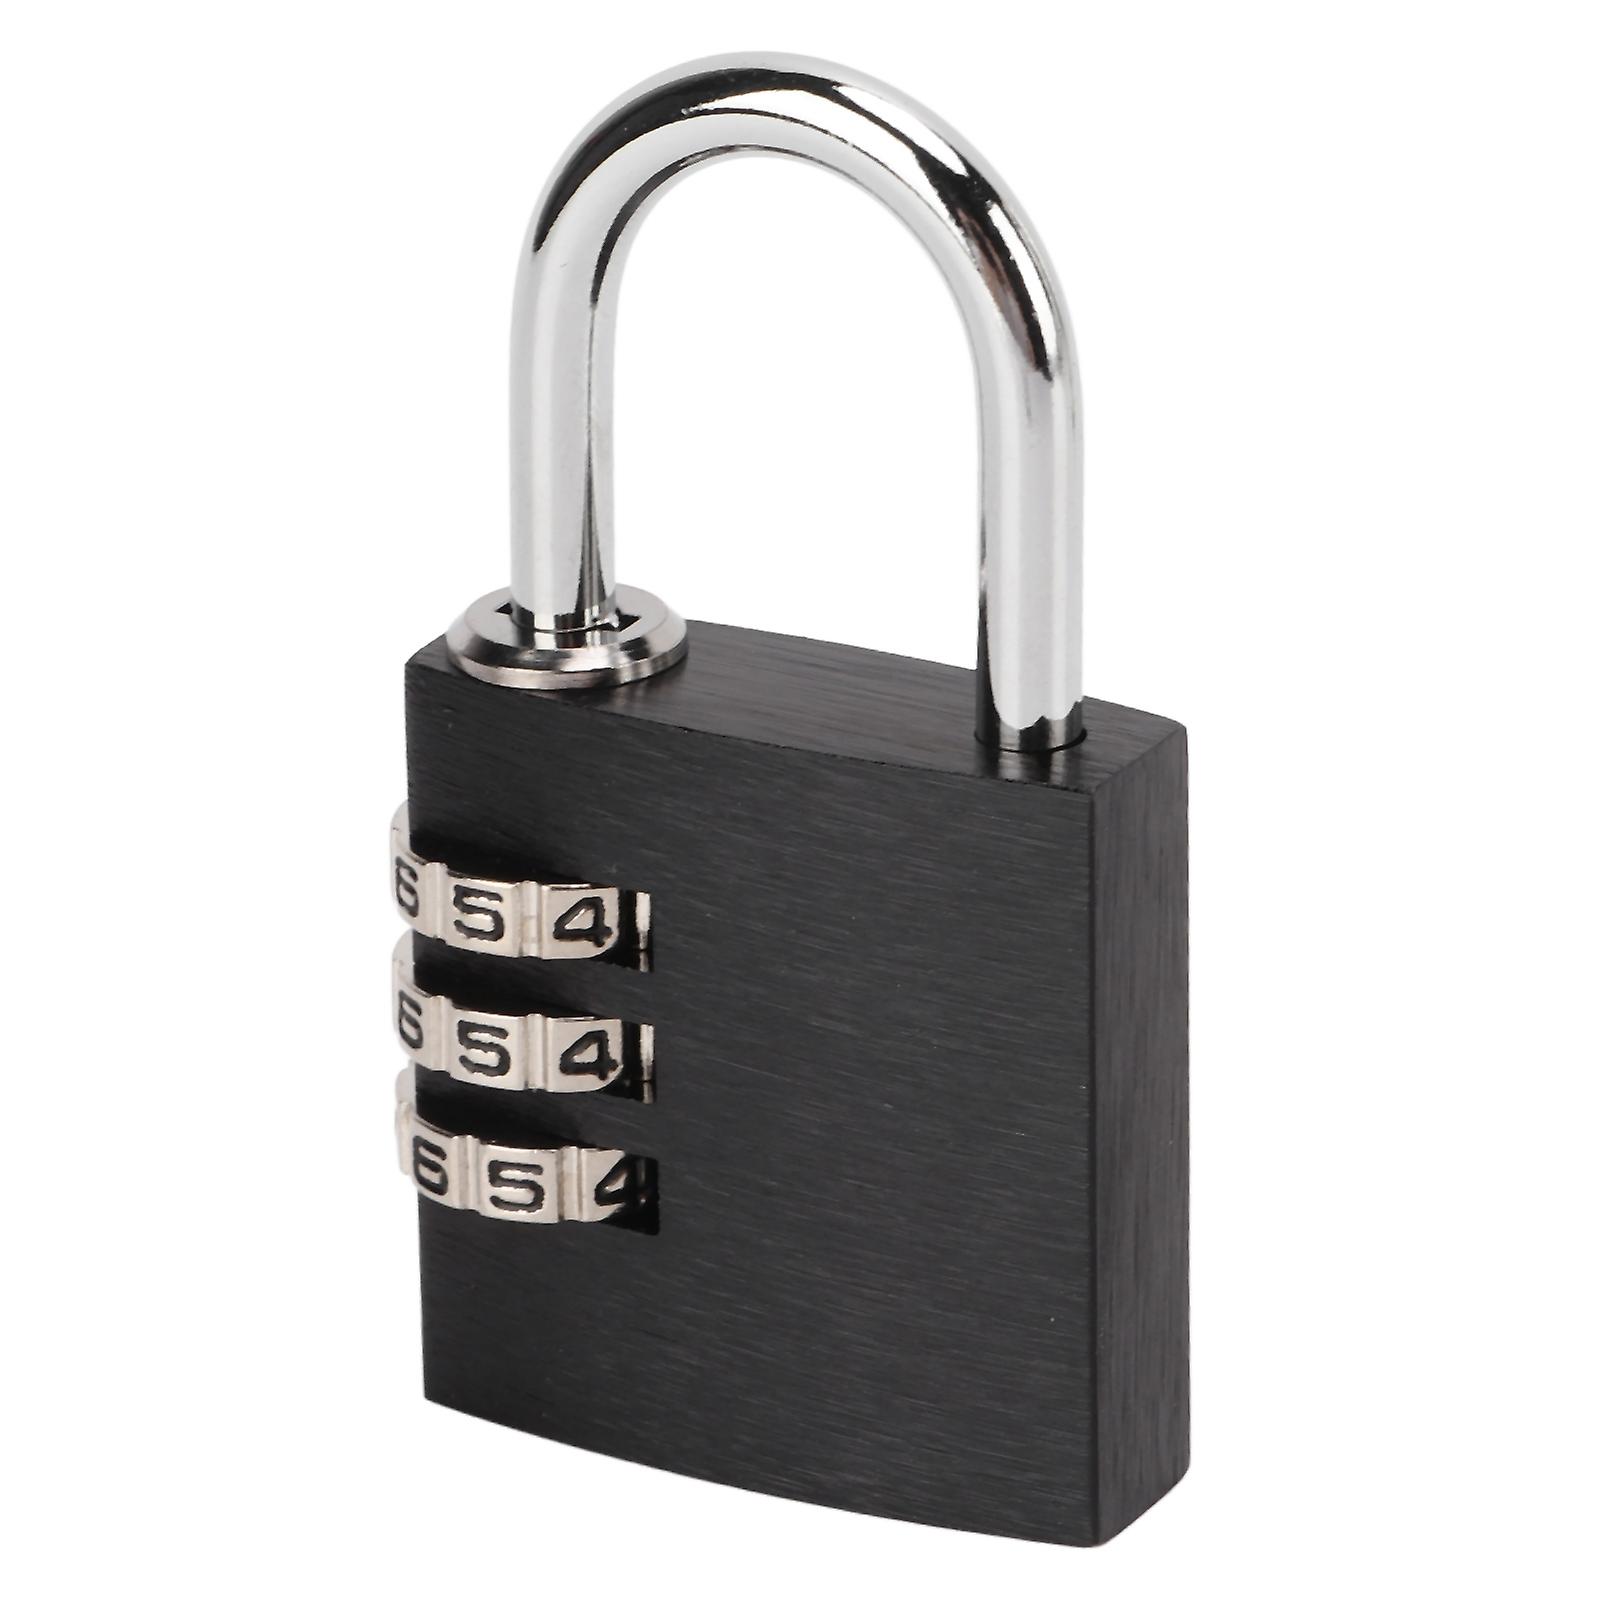 3 Digits Security Combination Padlock Black Solid Aluminum Alloy For Gym Locker Cabinet Toolbox Luggagelarge Padlock